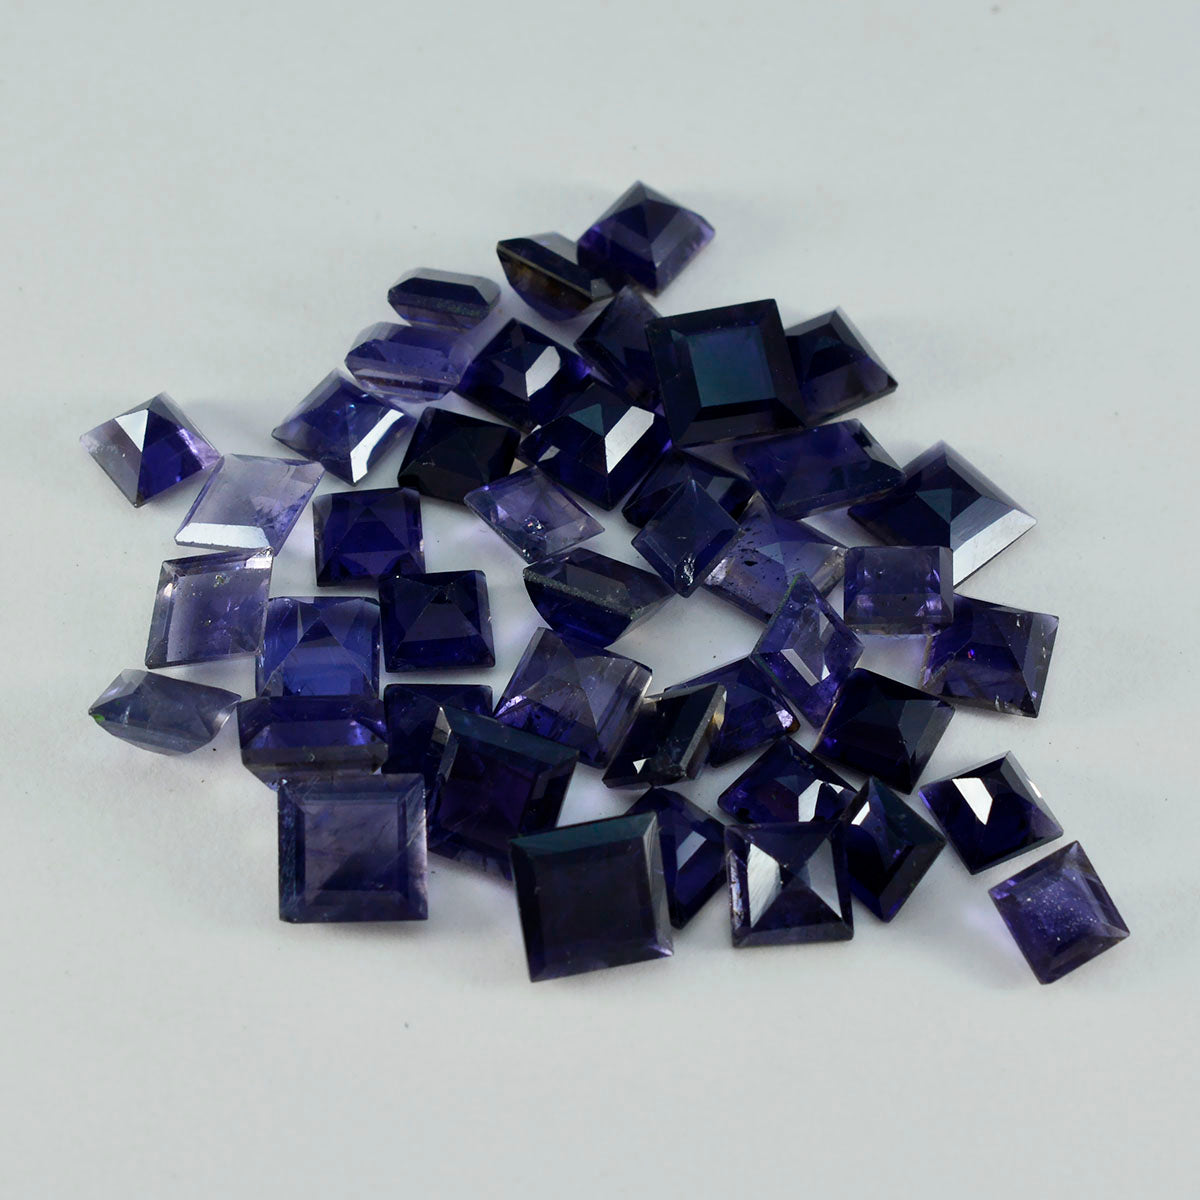 Riyogems 1PC Blue Iolite Faceted 9x9 mm Square Shape A1 Quality Loose Gems